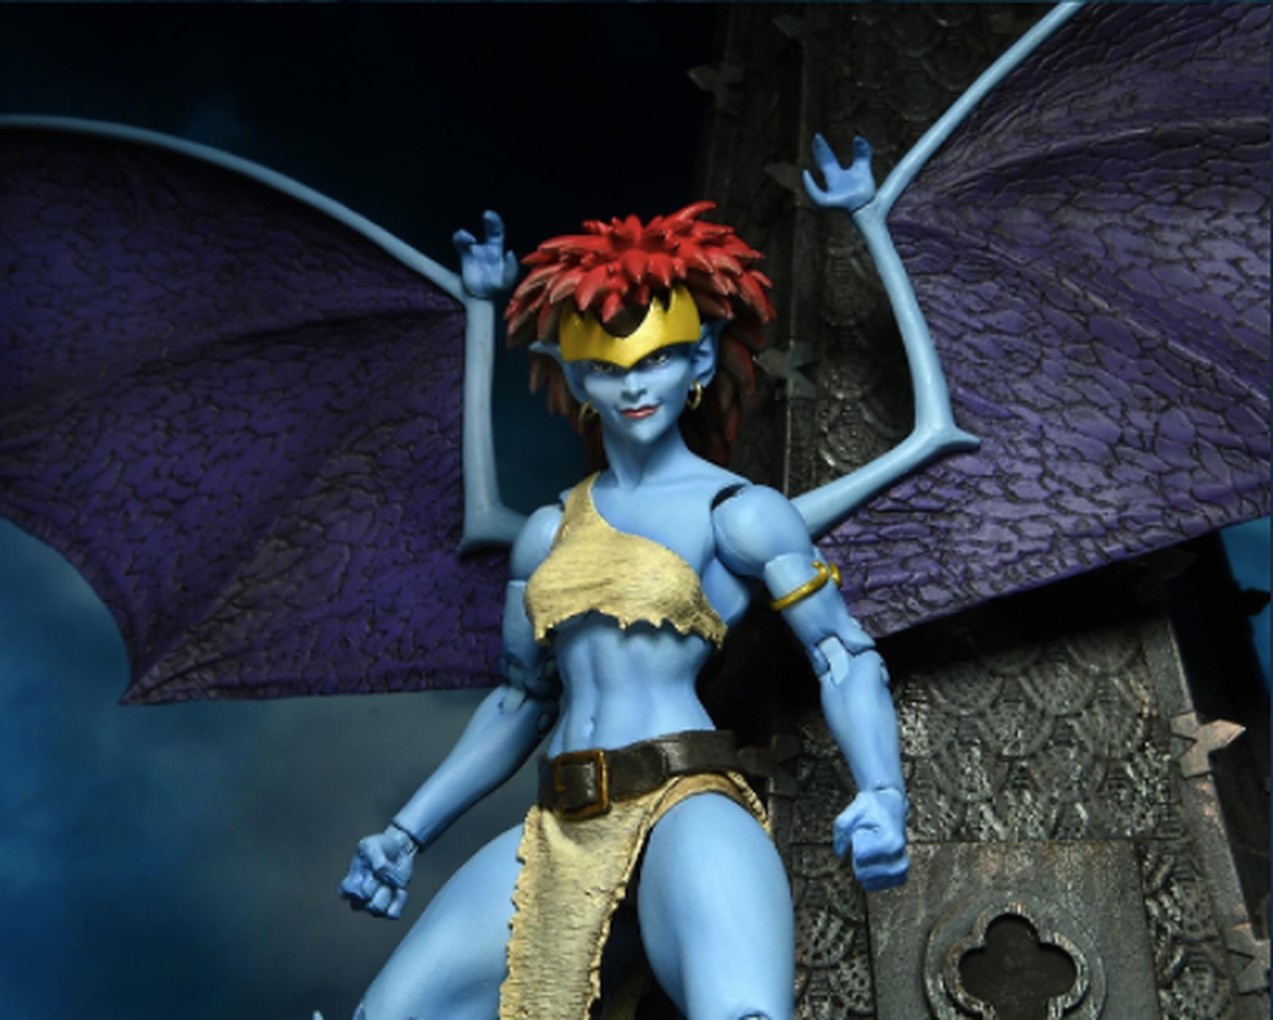 NECA Gargoyles: Demona figure revealed